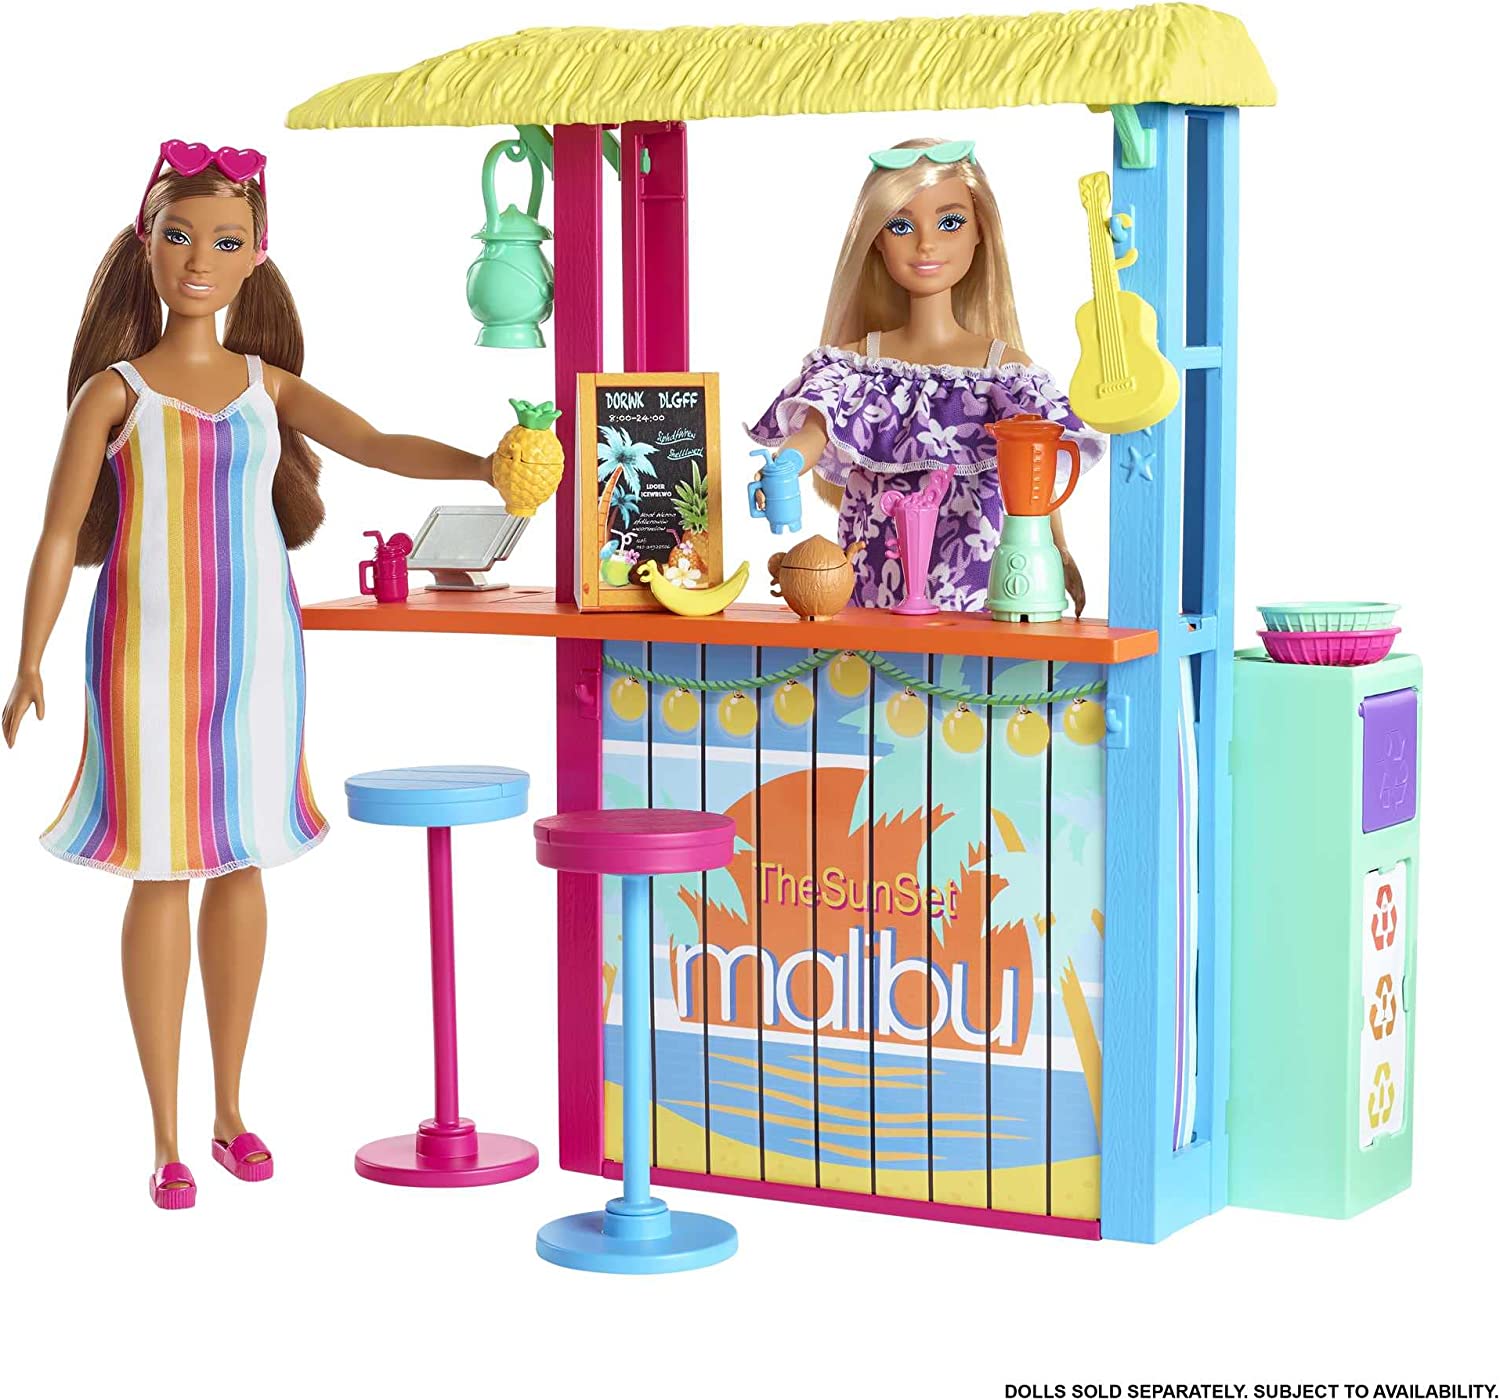 Barbie GYG23 Loves the Ocean Beach Shack Playset  GASCHer's Spielwarenshop   